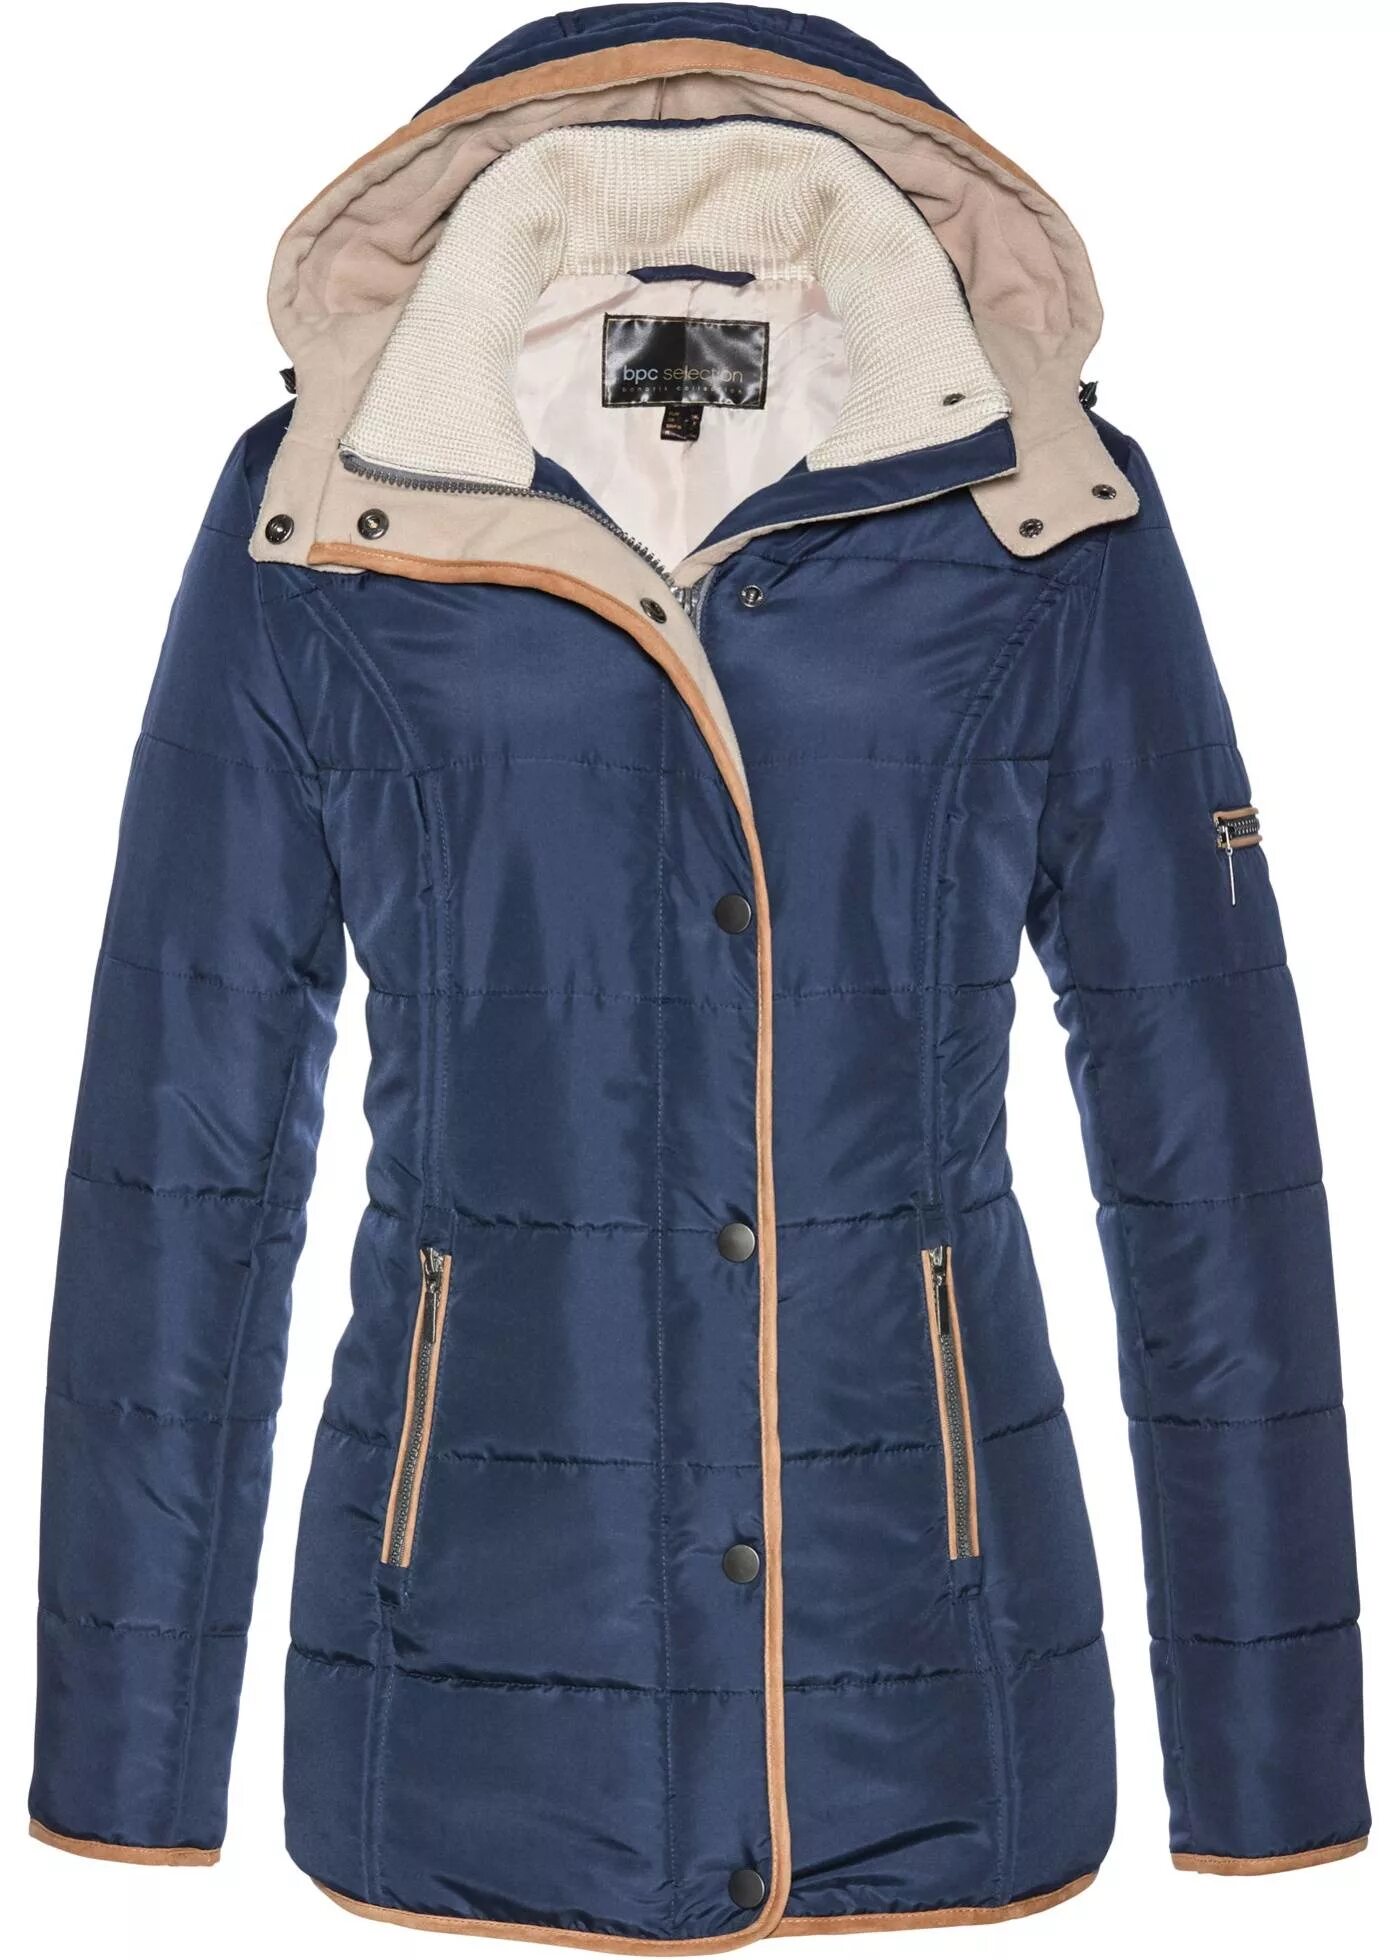 Куртка синяя Бонприкс спортивная. Куртка bonprix синяя. Куртка женская зимняя. Куртка утепленная женская.